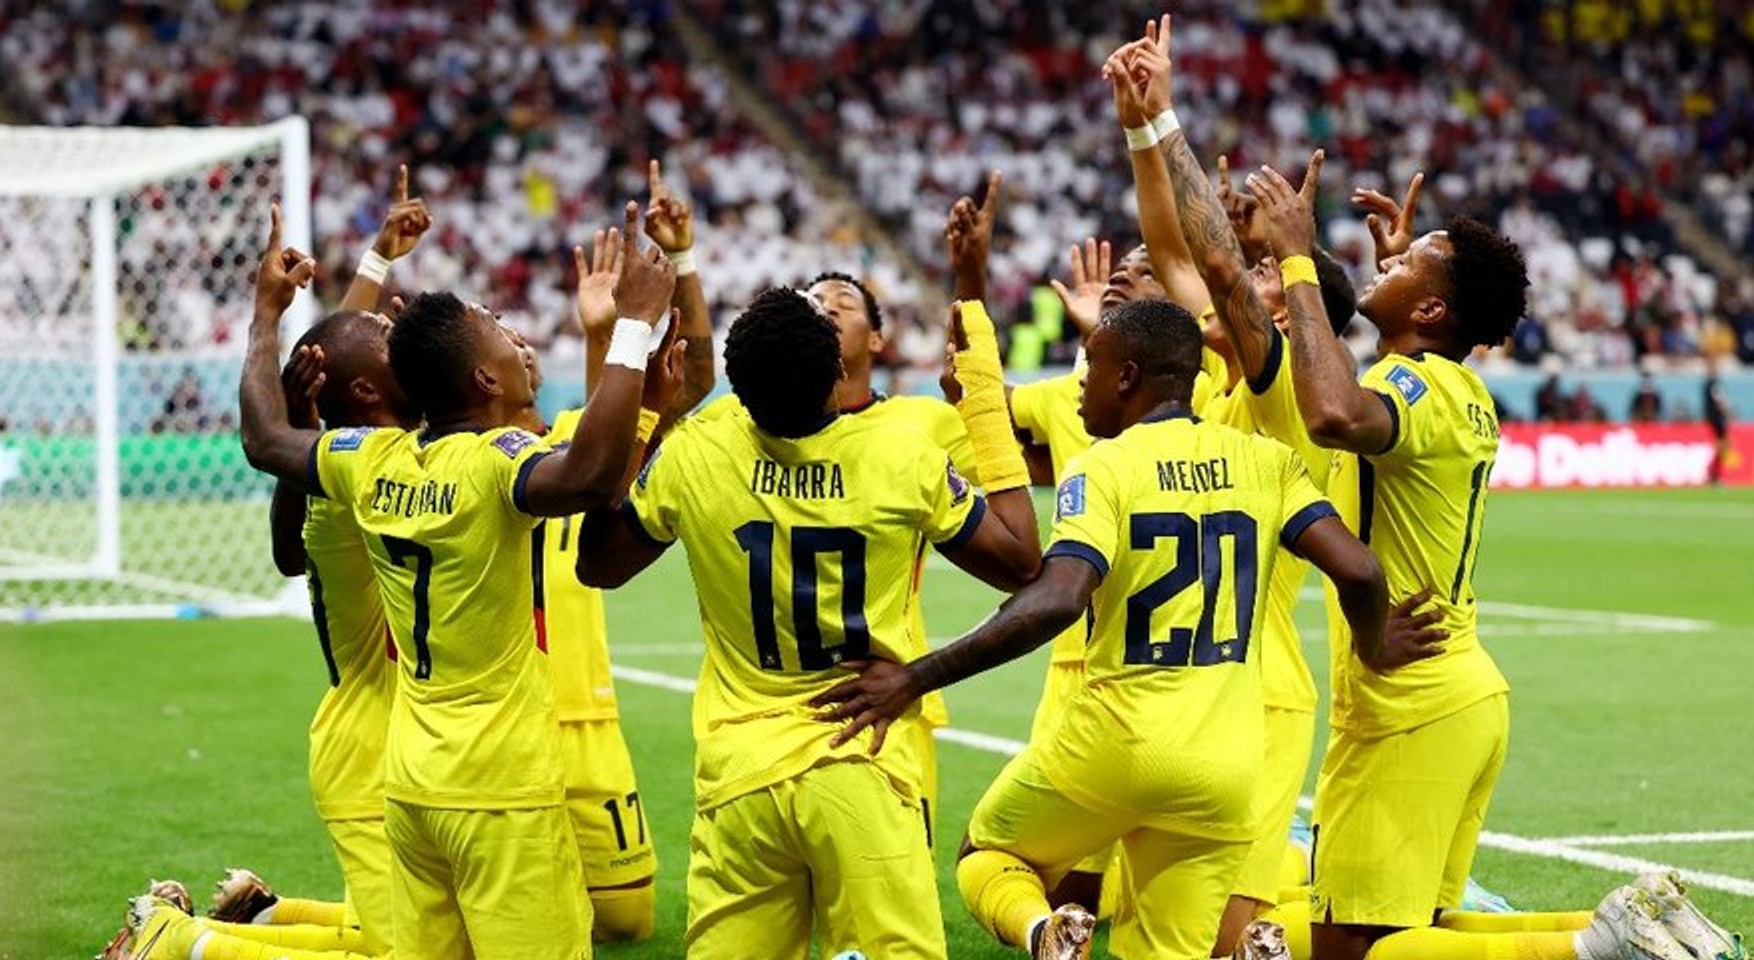 Сборная Эквадора победила Катар в матче открытия ЧМ по футболу. Ранее Катар обвиняли в подкупе соперника 